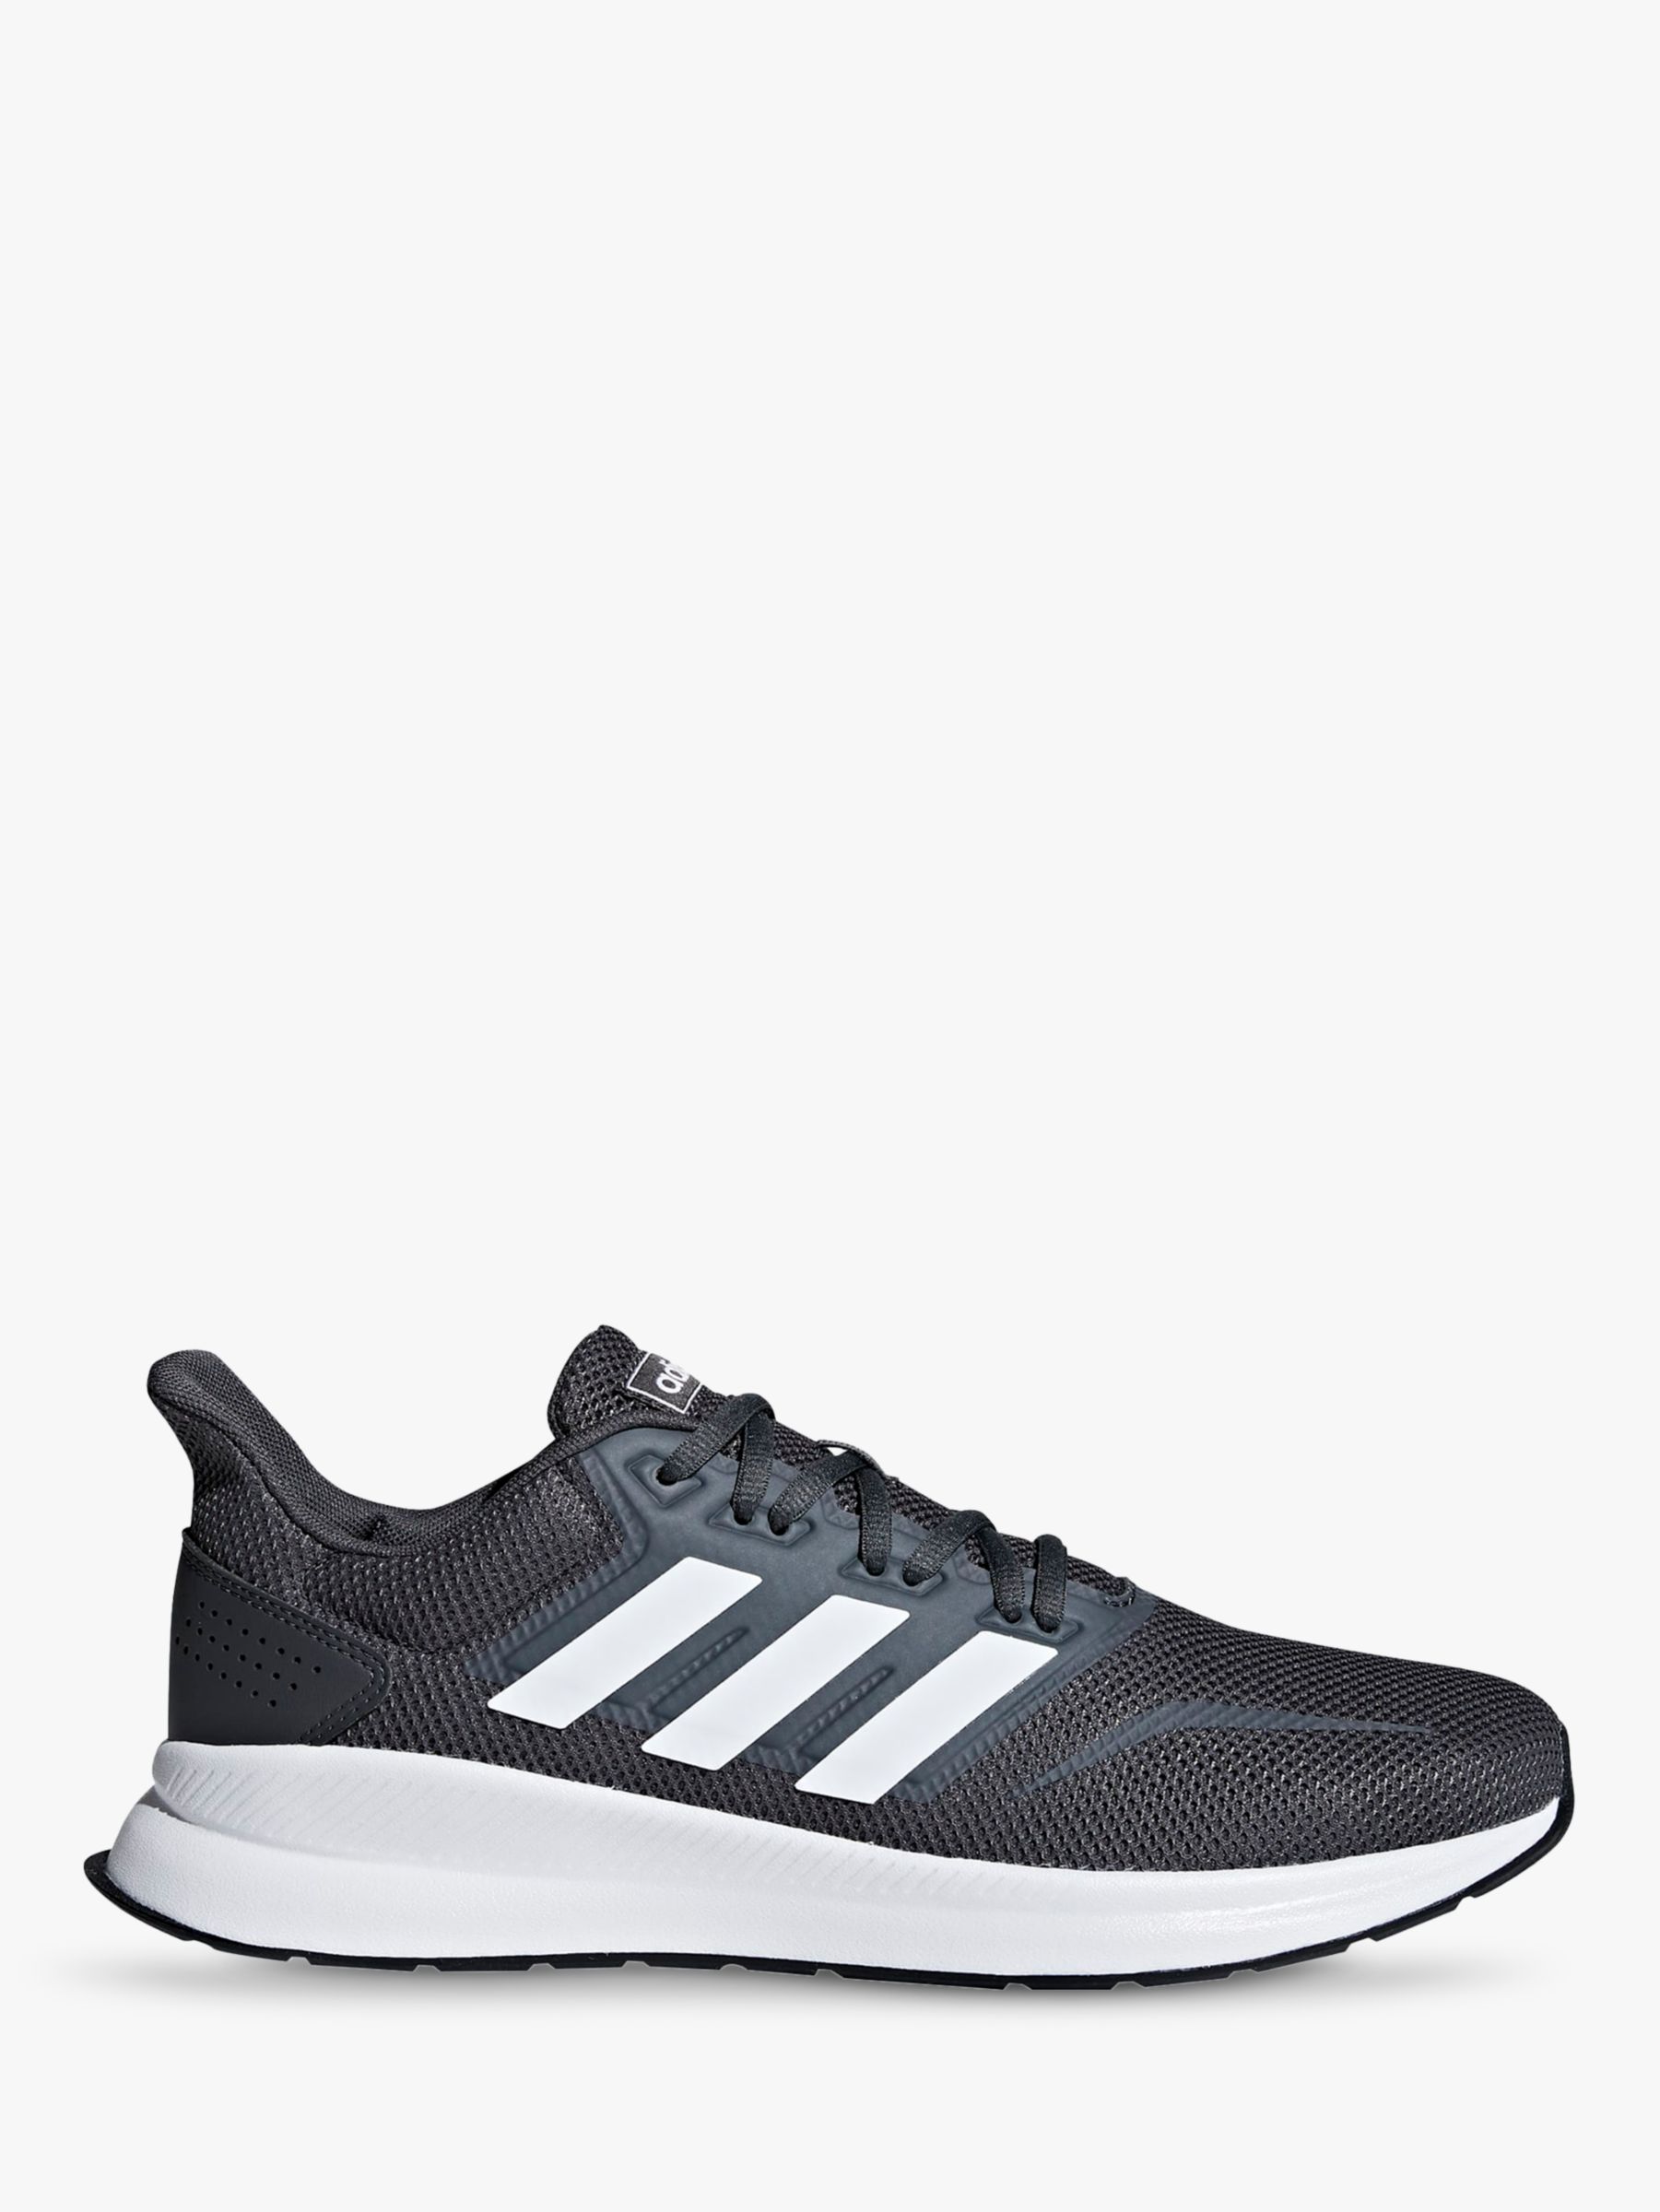 adidas Runfalcon Men's Running Shoes, Grey Six/FTWR White/Core Black